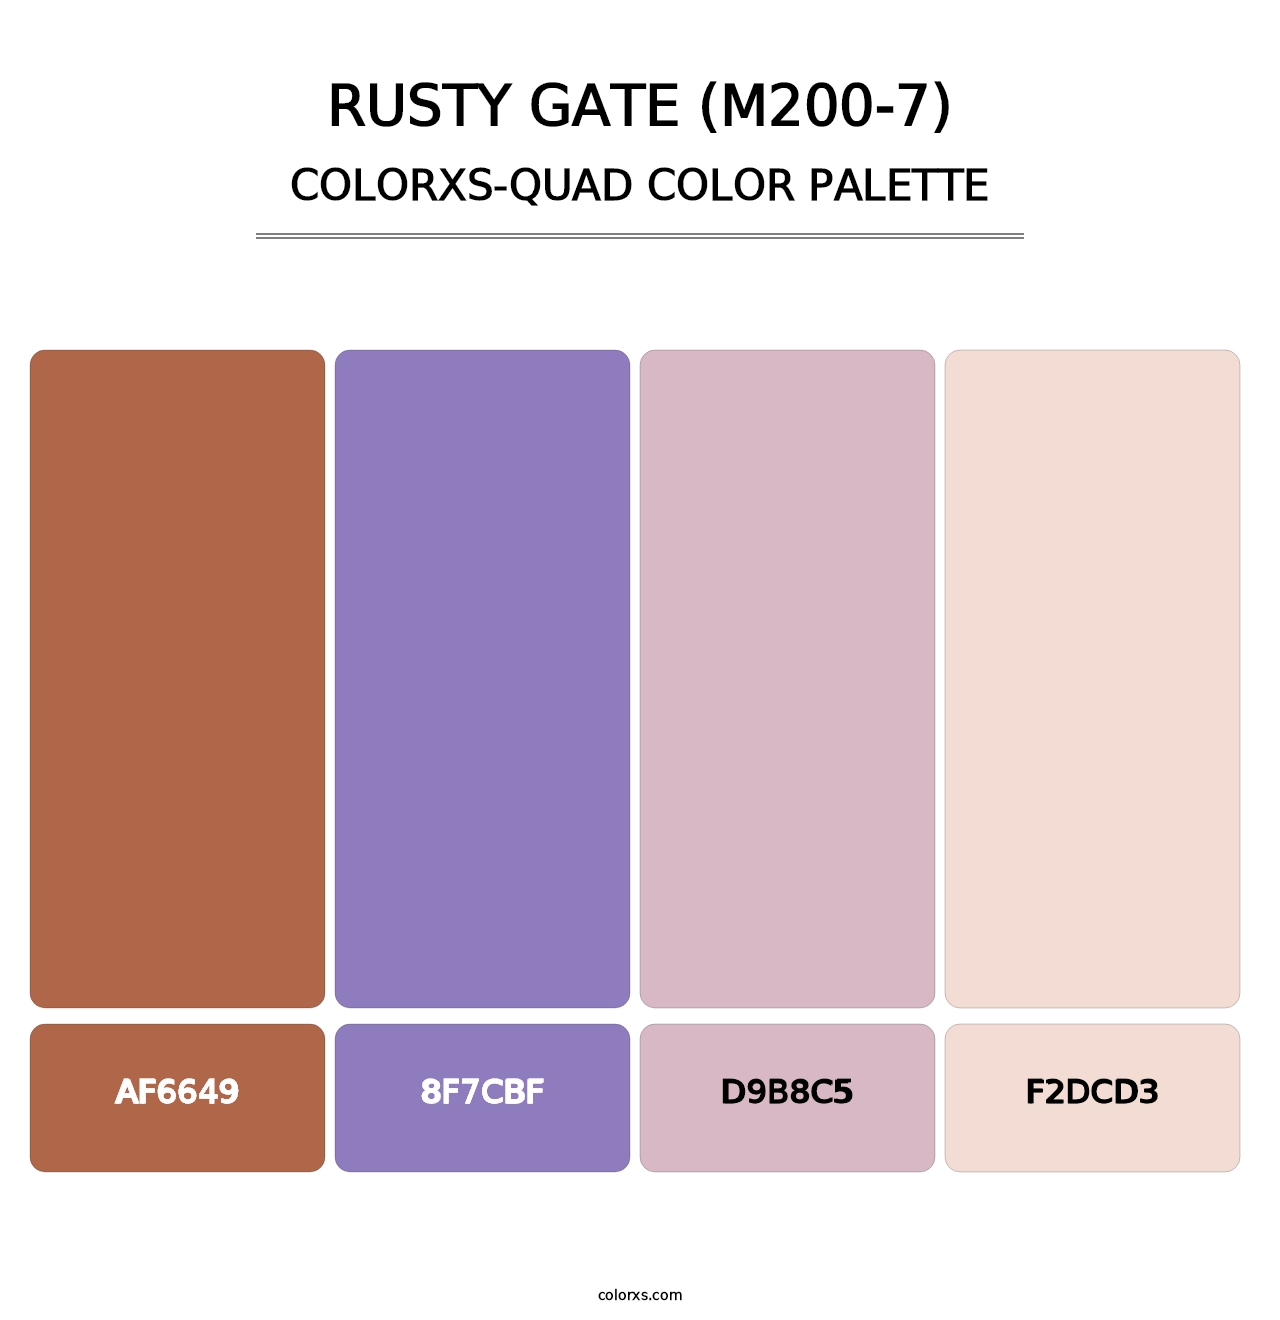 Rusty Gate (M200-7) - Colorxs Quad Palette